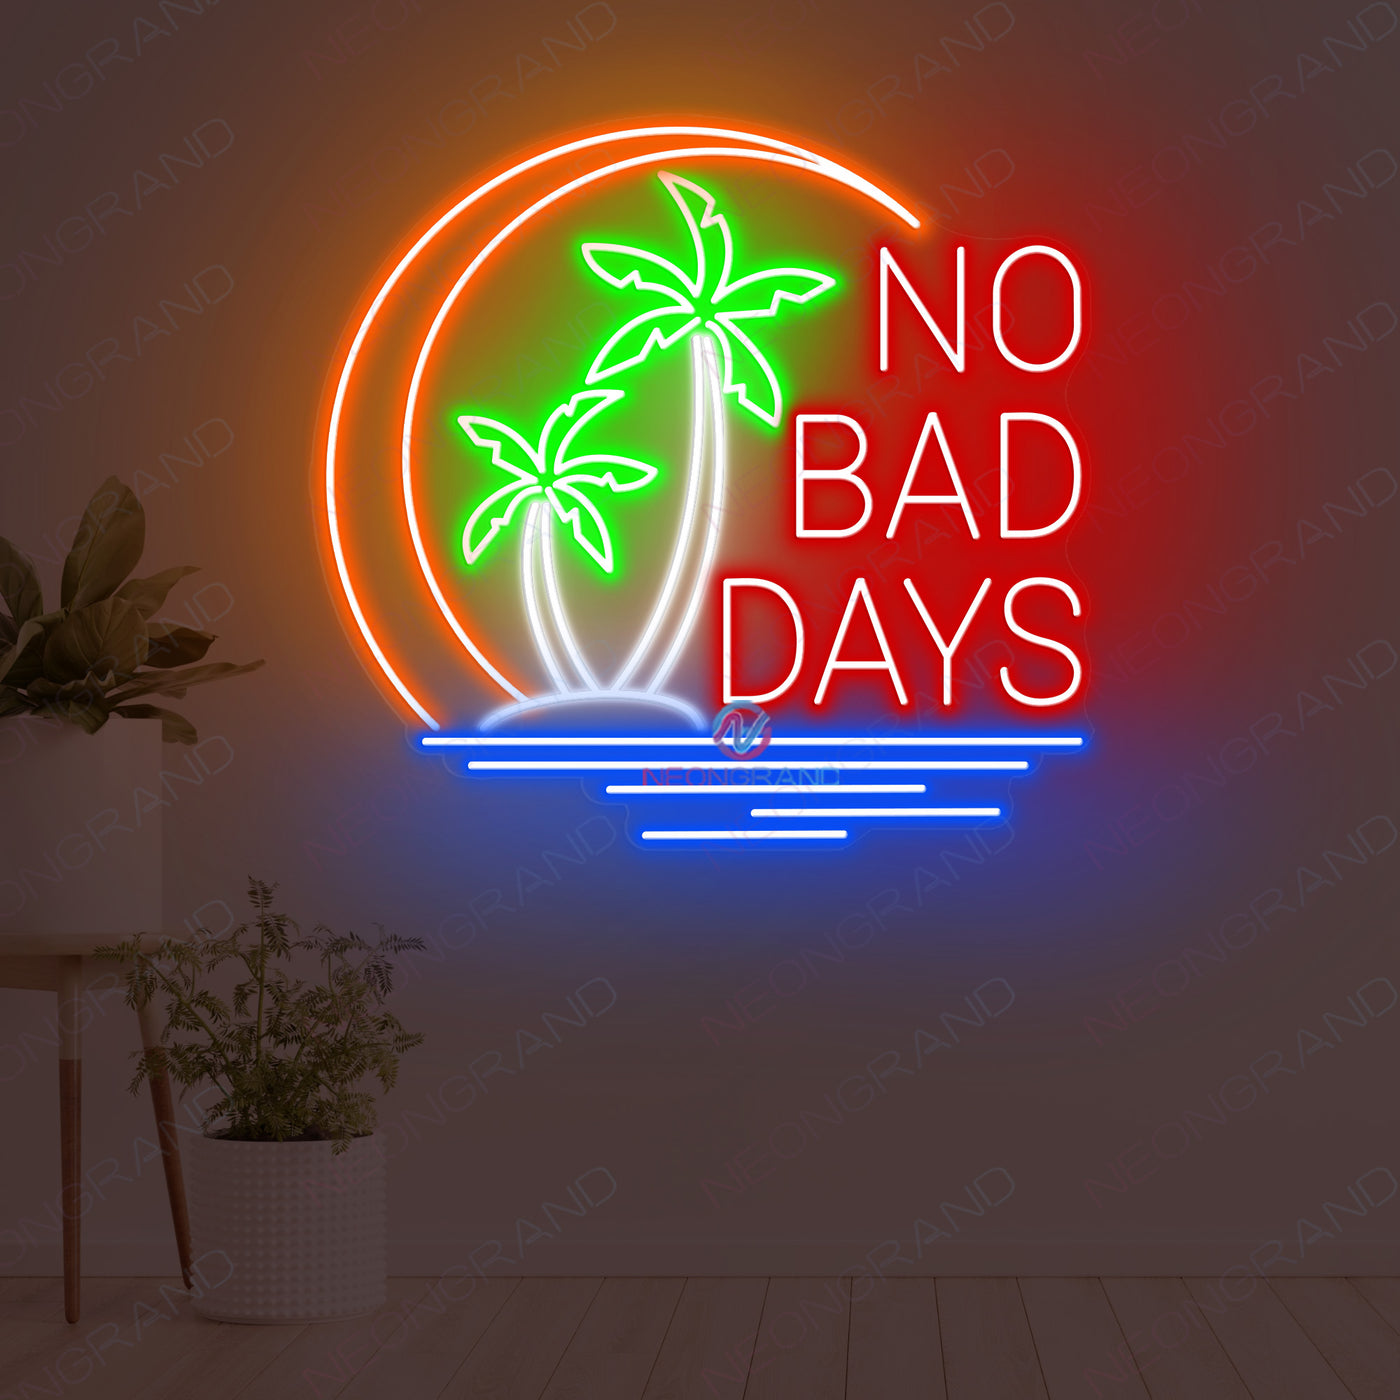 No Bad Days Neon Sign Inspirational Led Light